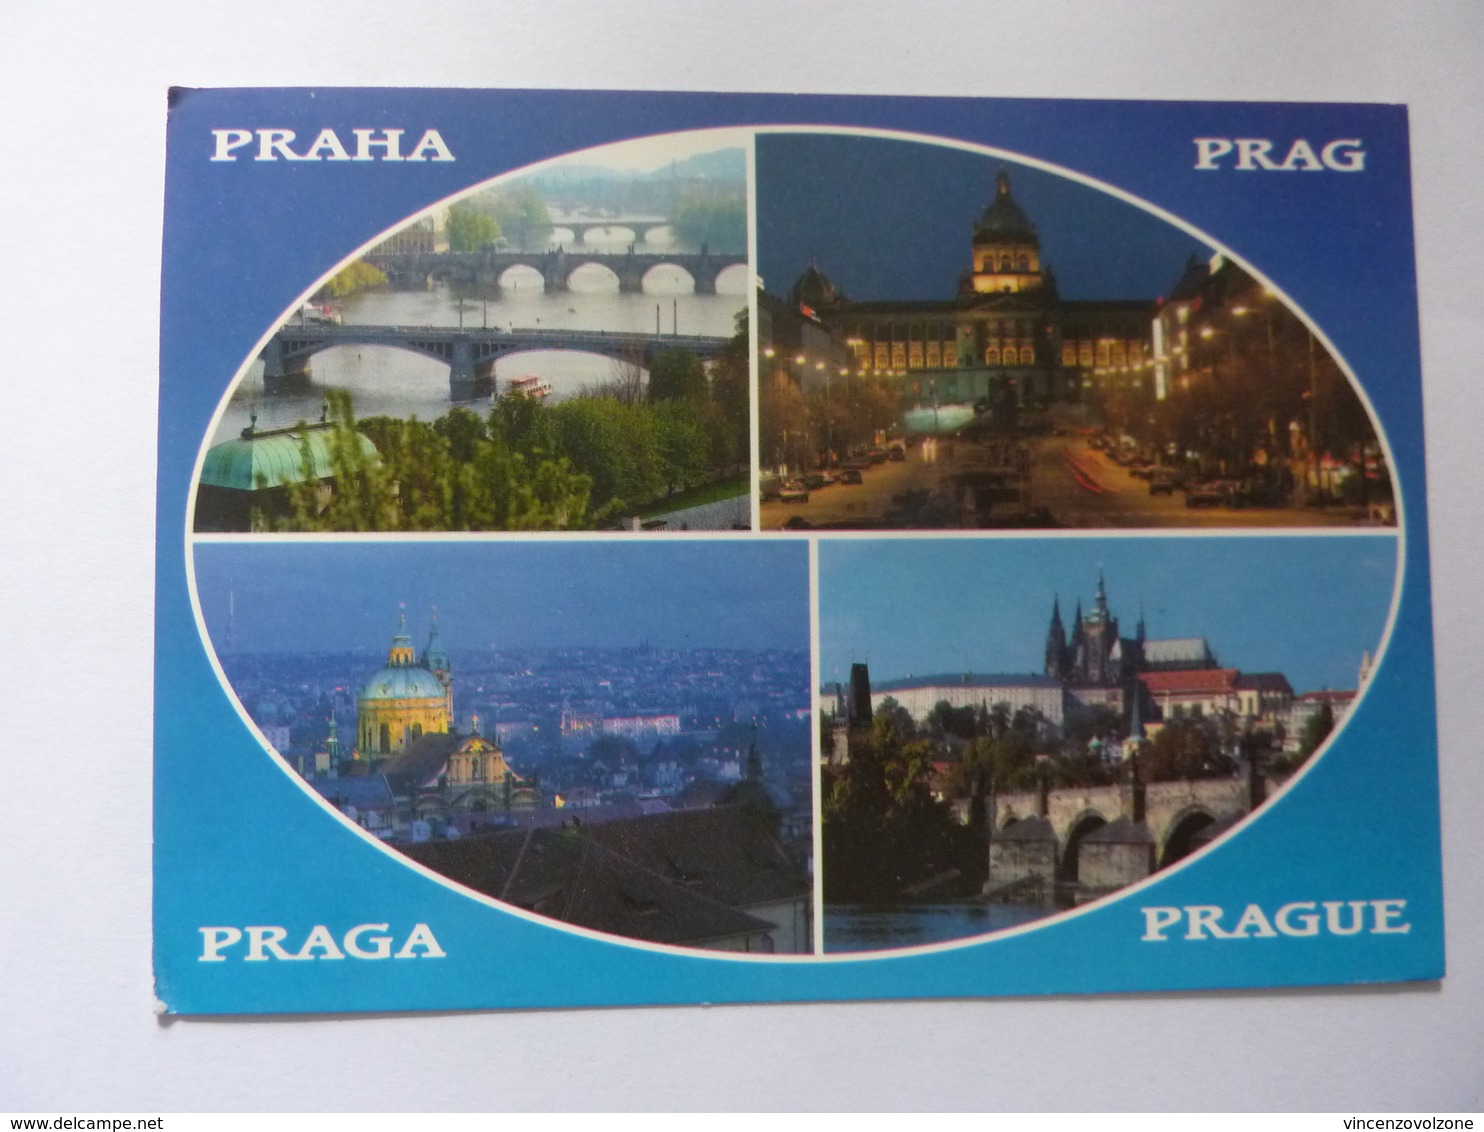 Cartolina Viaggiata "PRAHA" 2000 - Repubblica Ceca